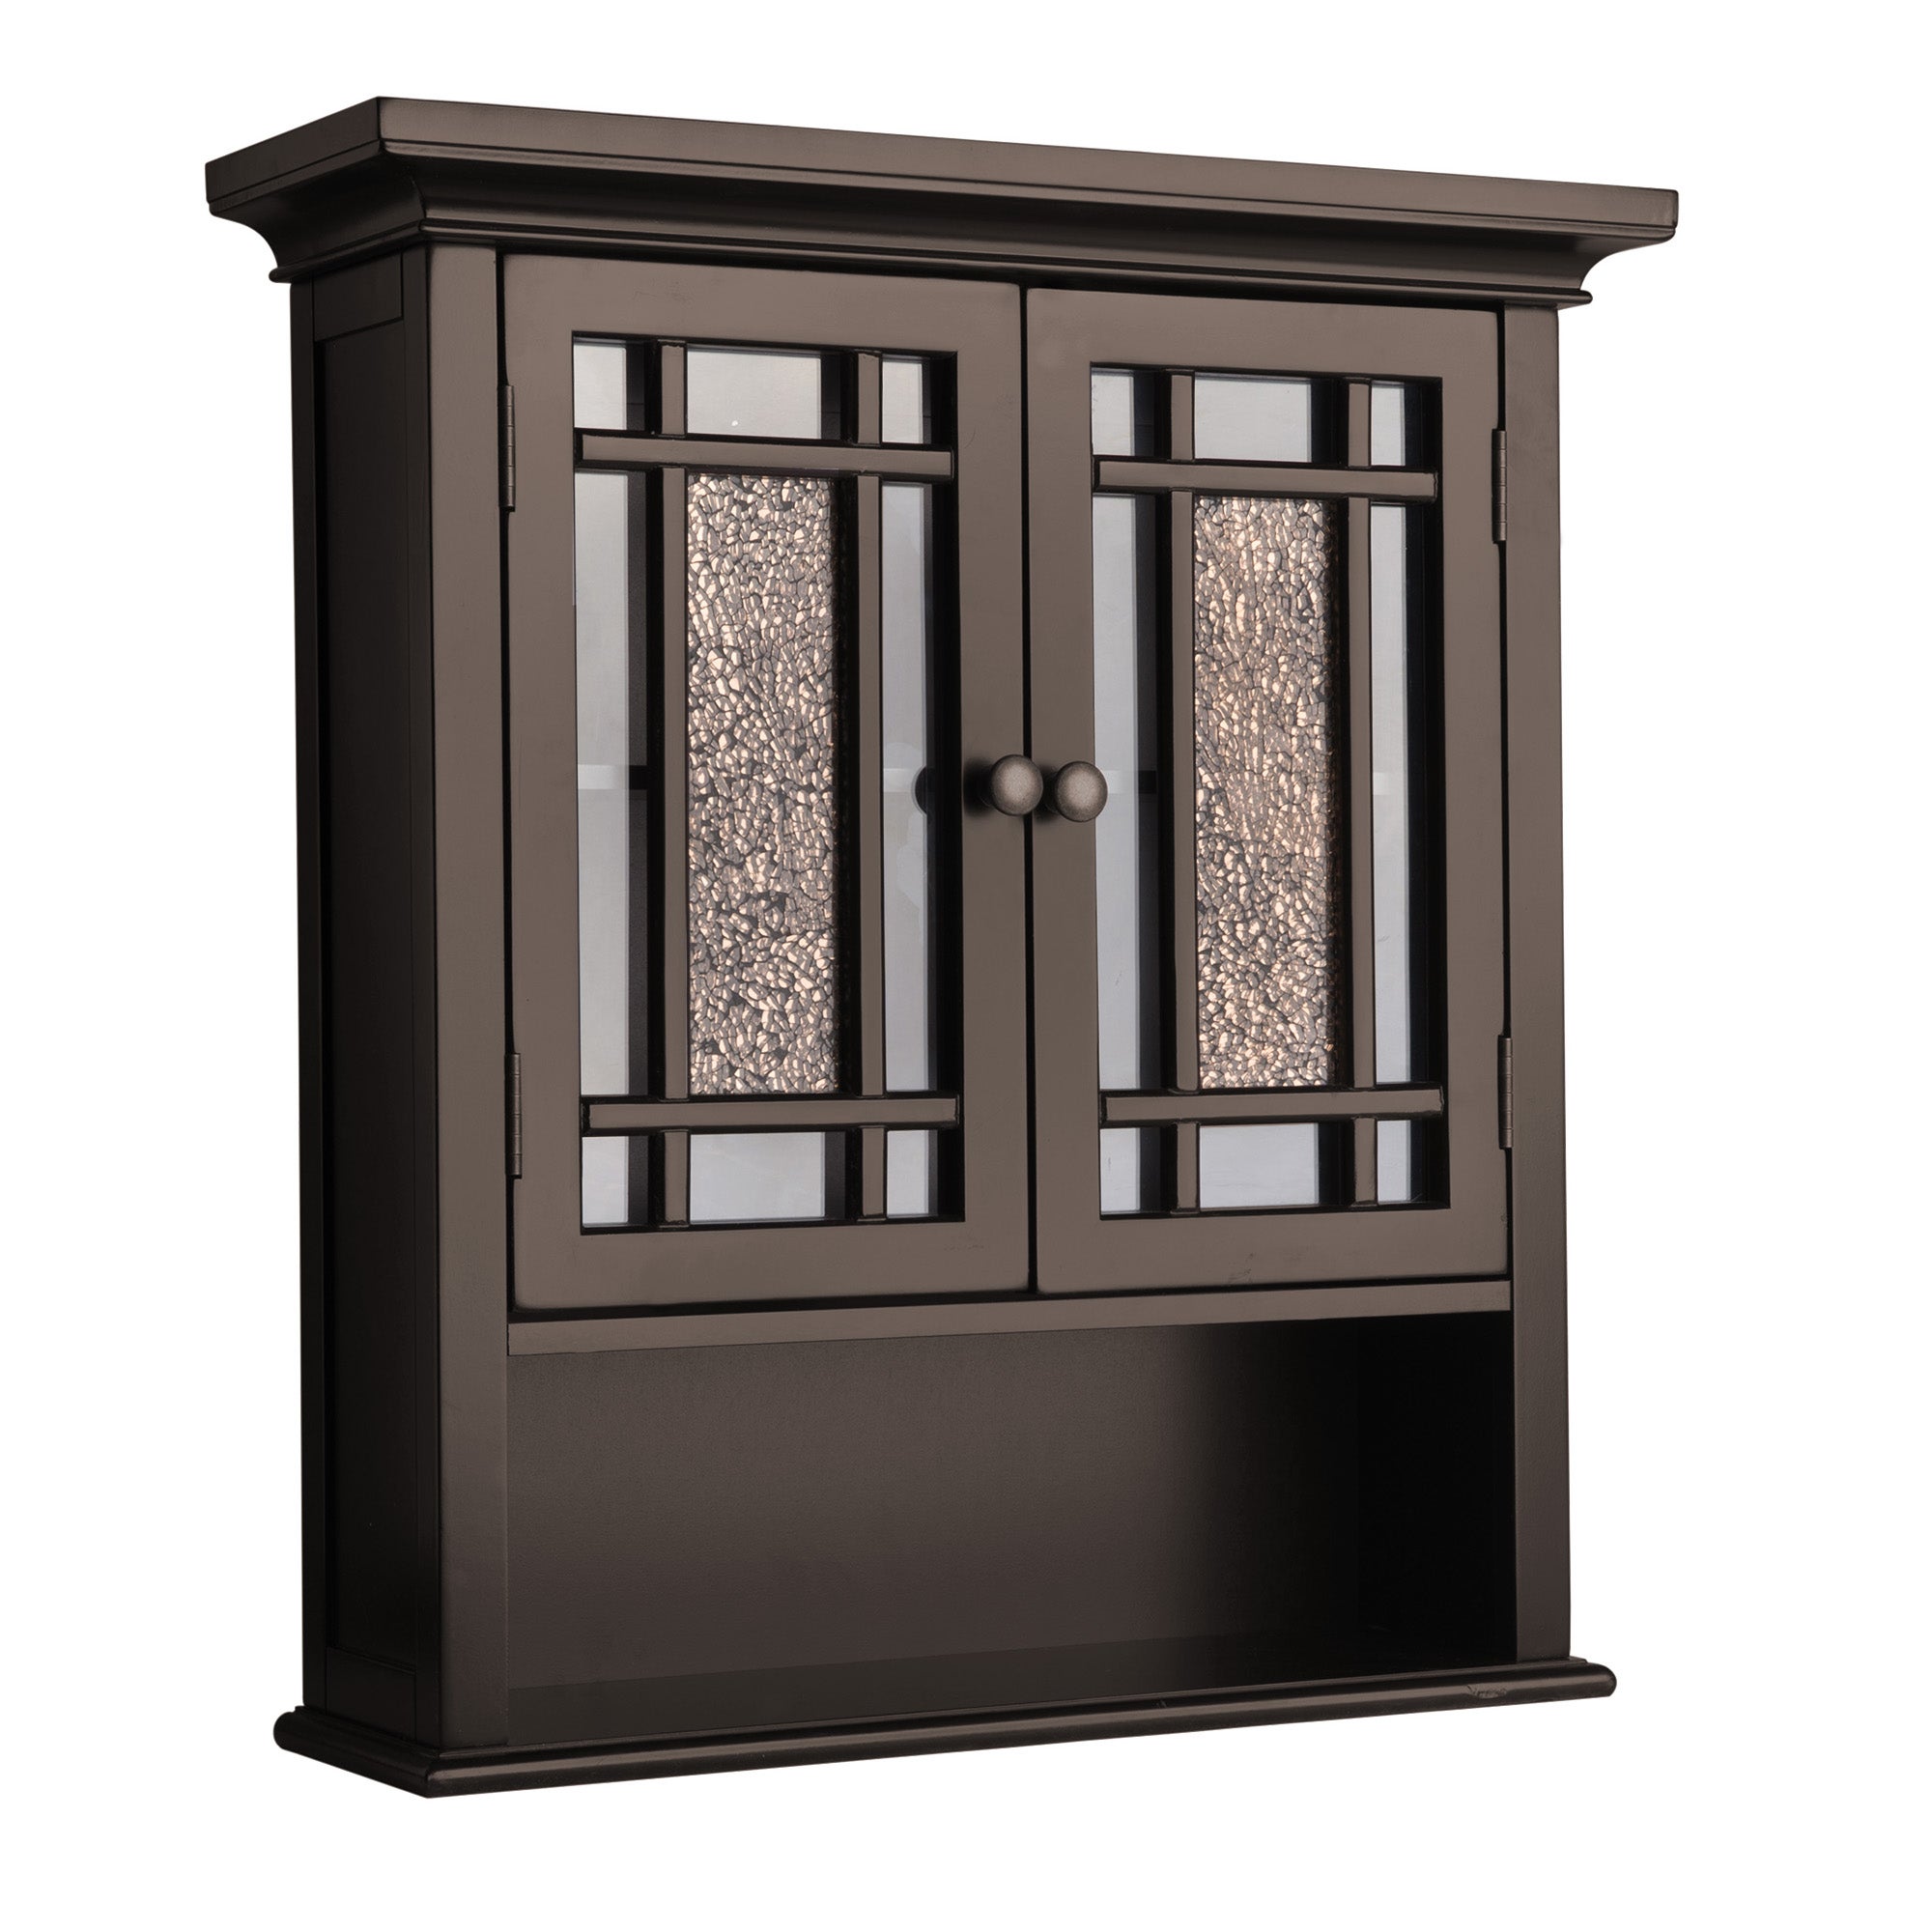 Teamson Home Wooden Bathroom Wall Cabinet Glass Doors Espresso ELG-532